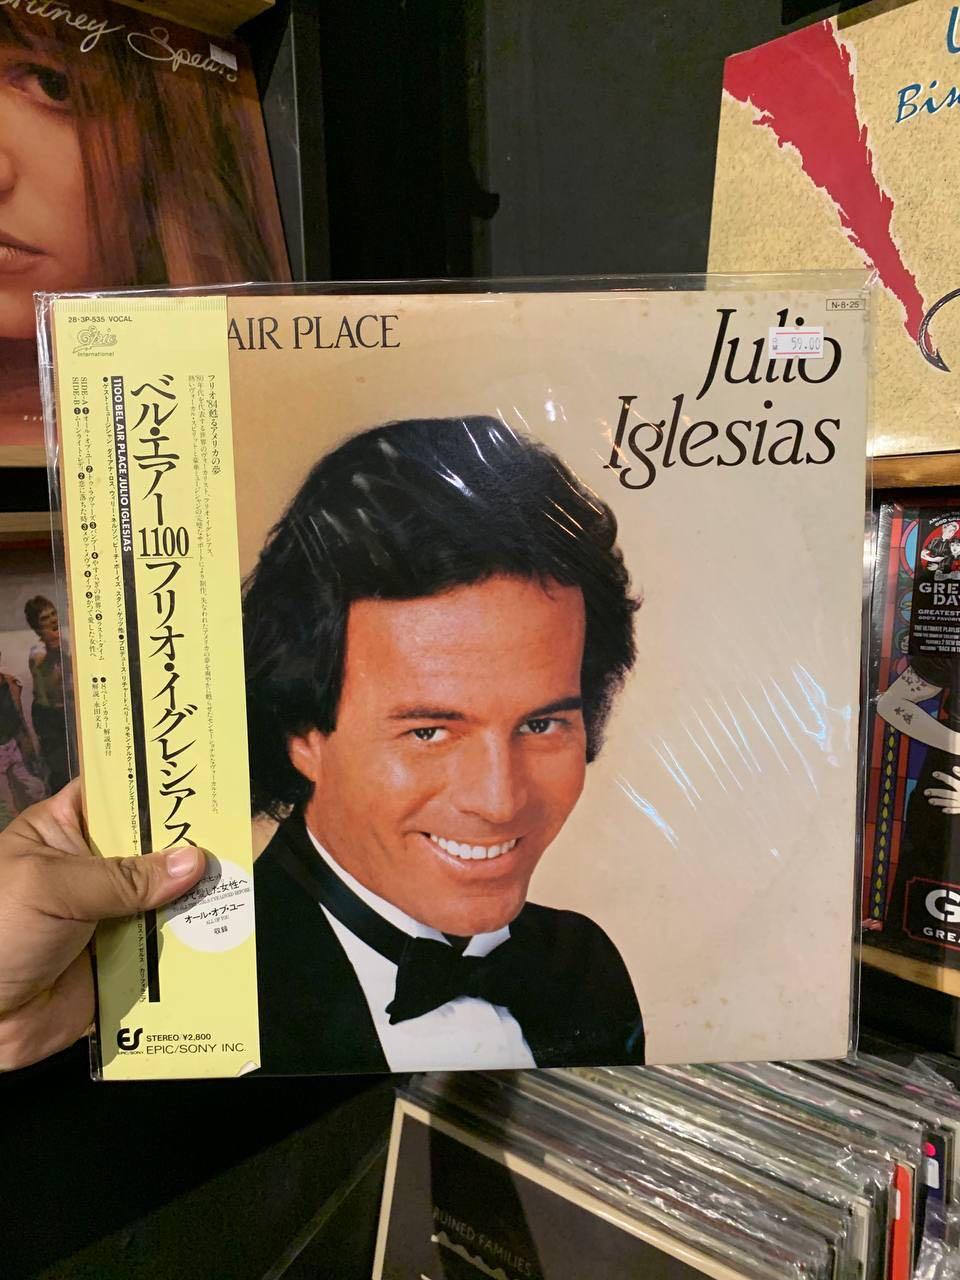 Julio Iglesias Bel Air Place Lp Vinyl Record Piring Hitam Music Media Cd S Dvd S